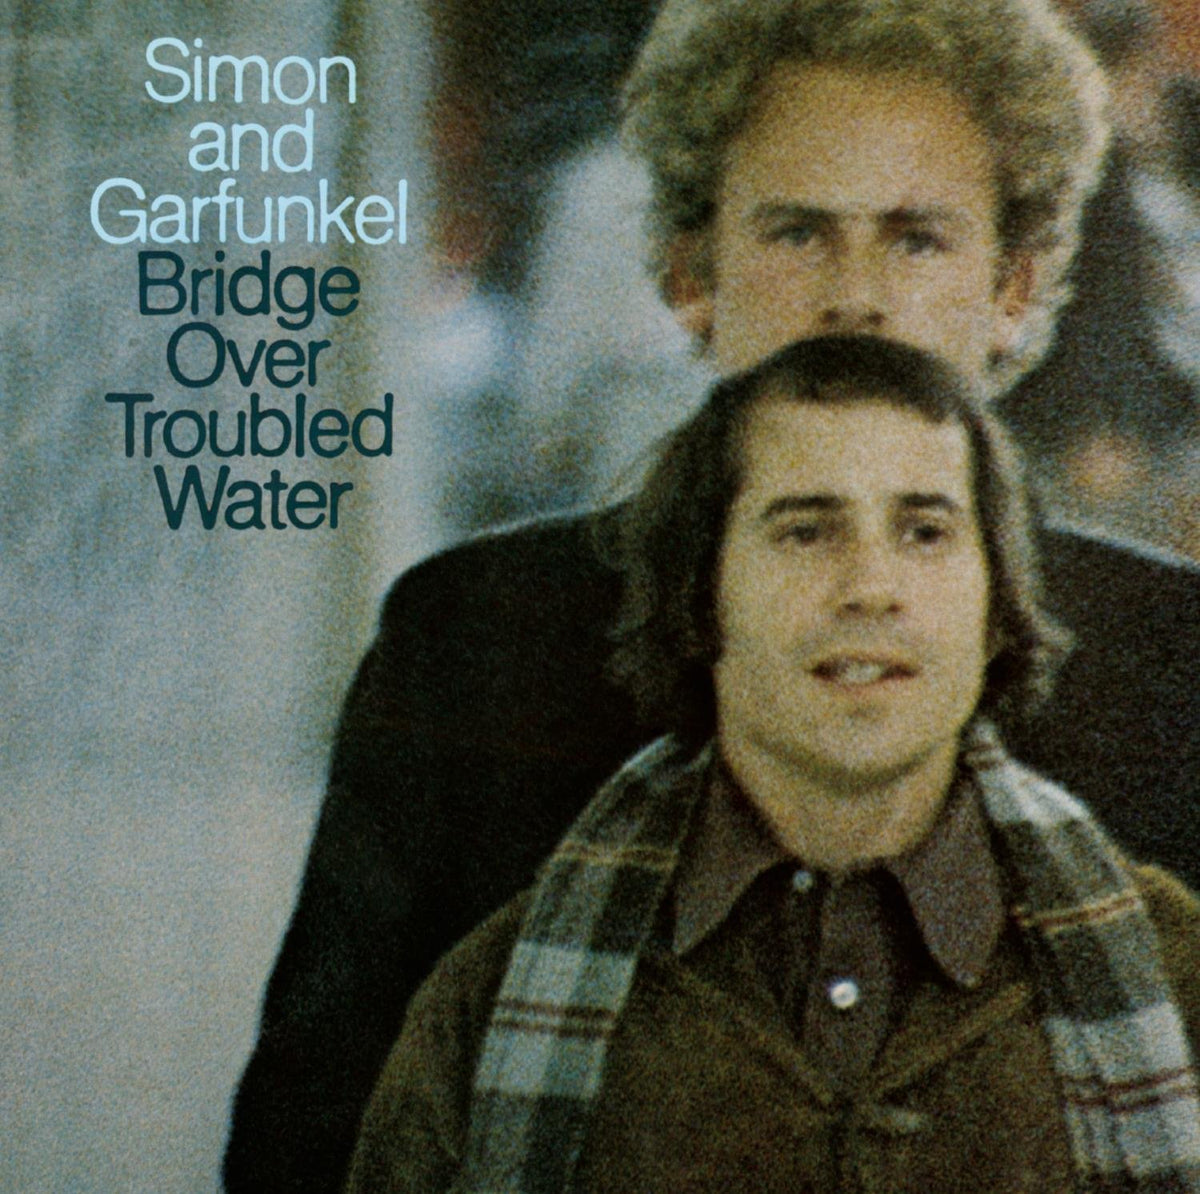 Simon & Garfunkel - Bridge Over Troubled Water (50th Anniversary Edition)